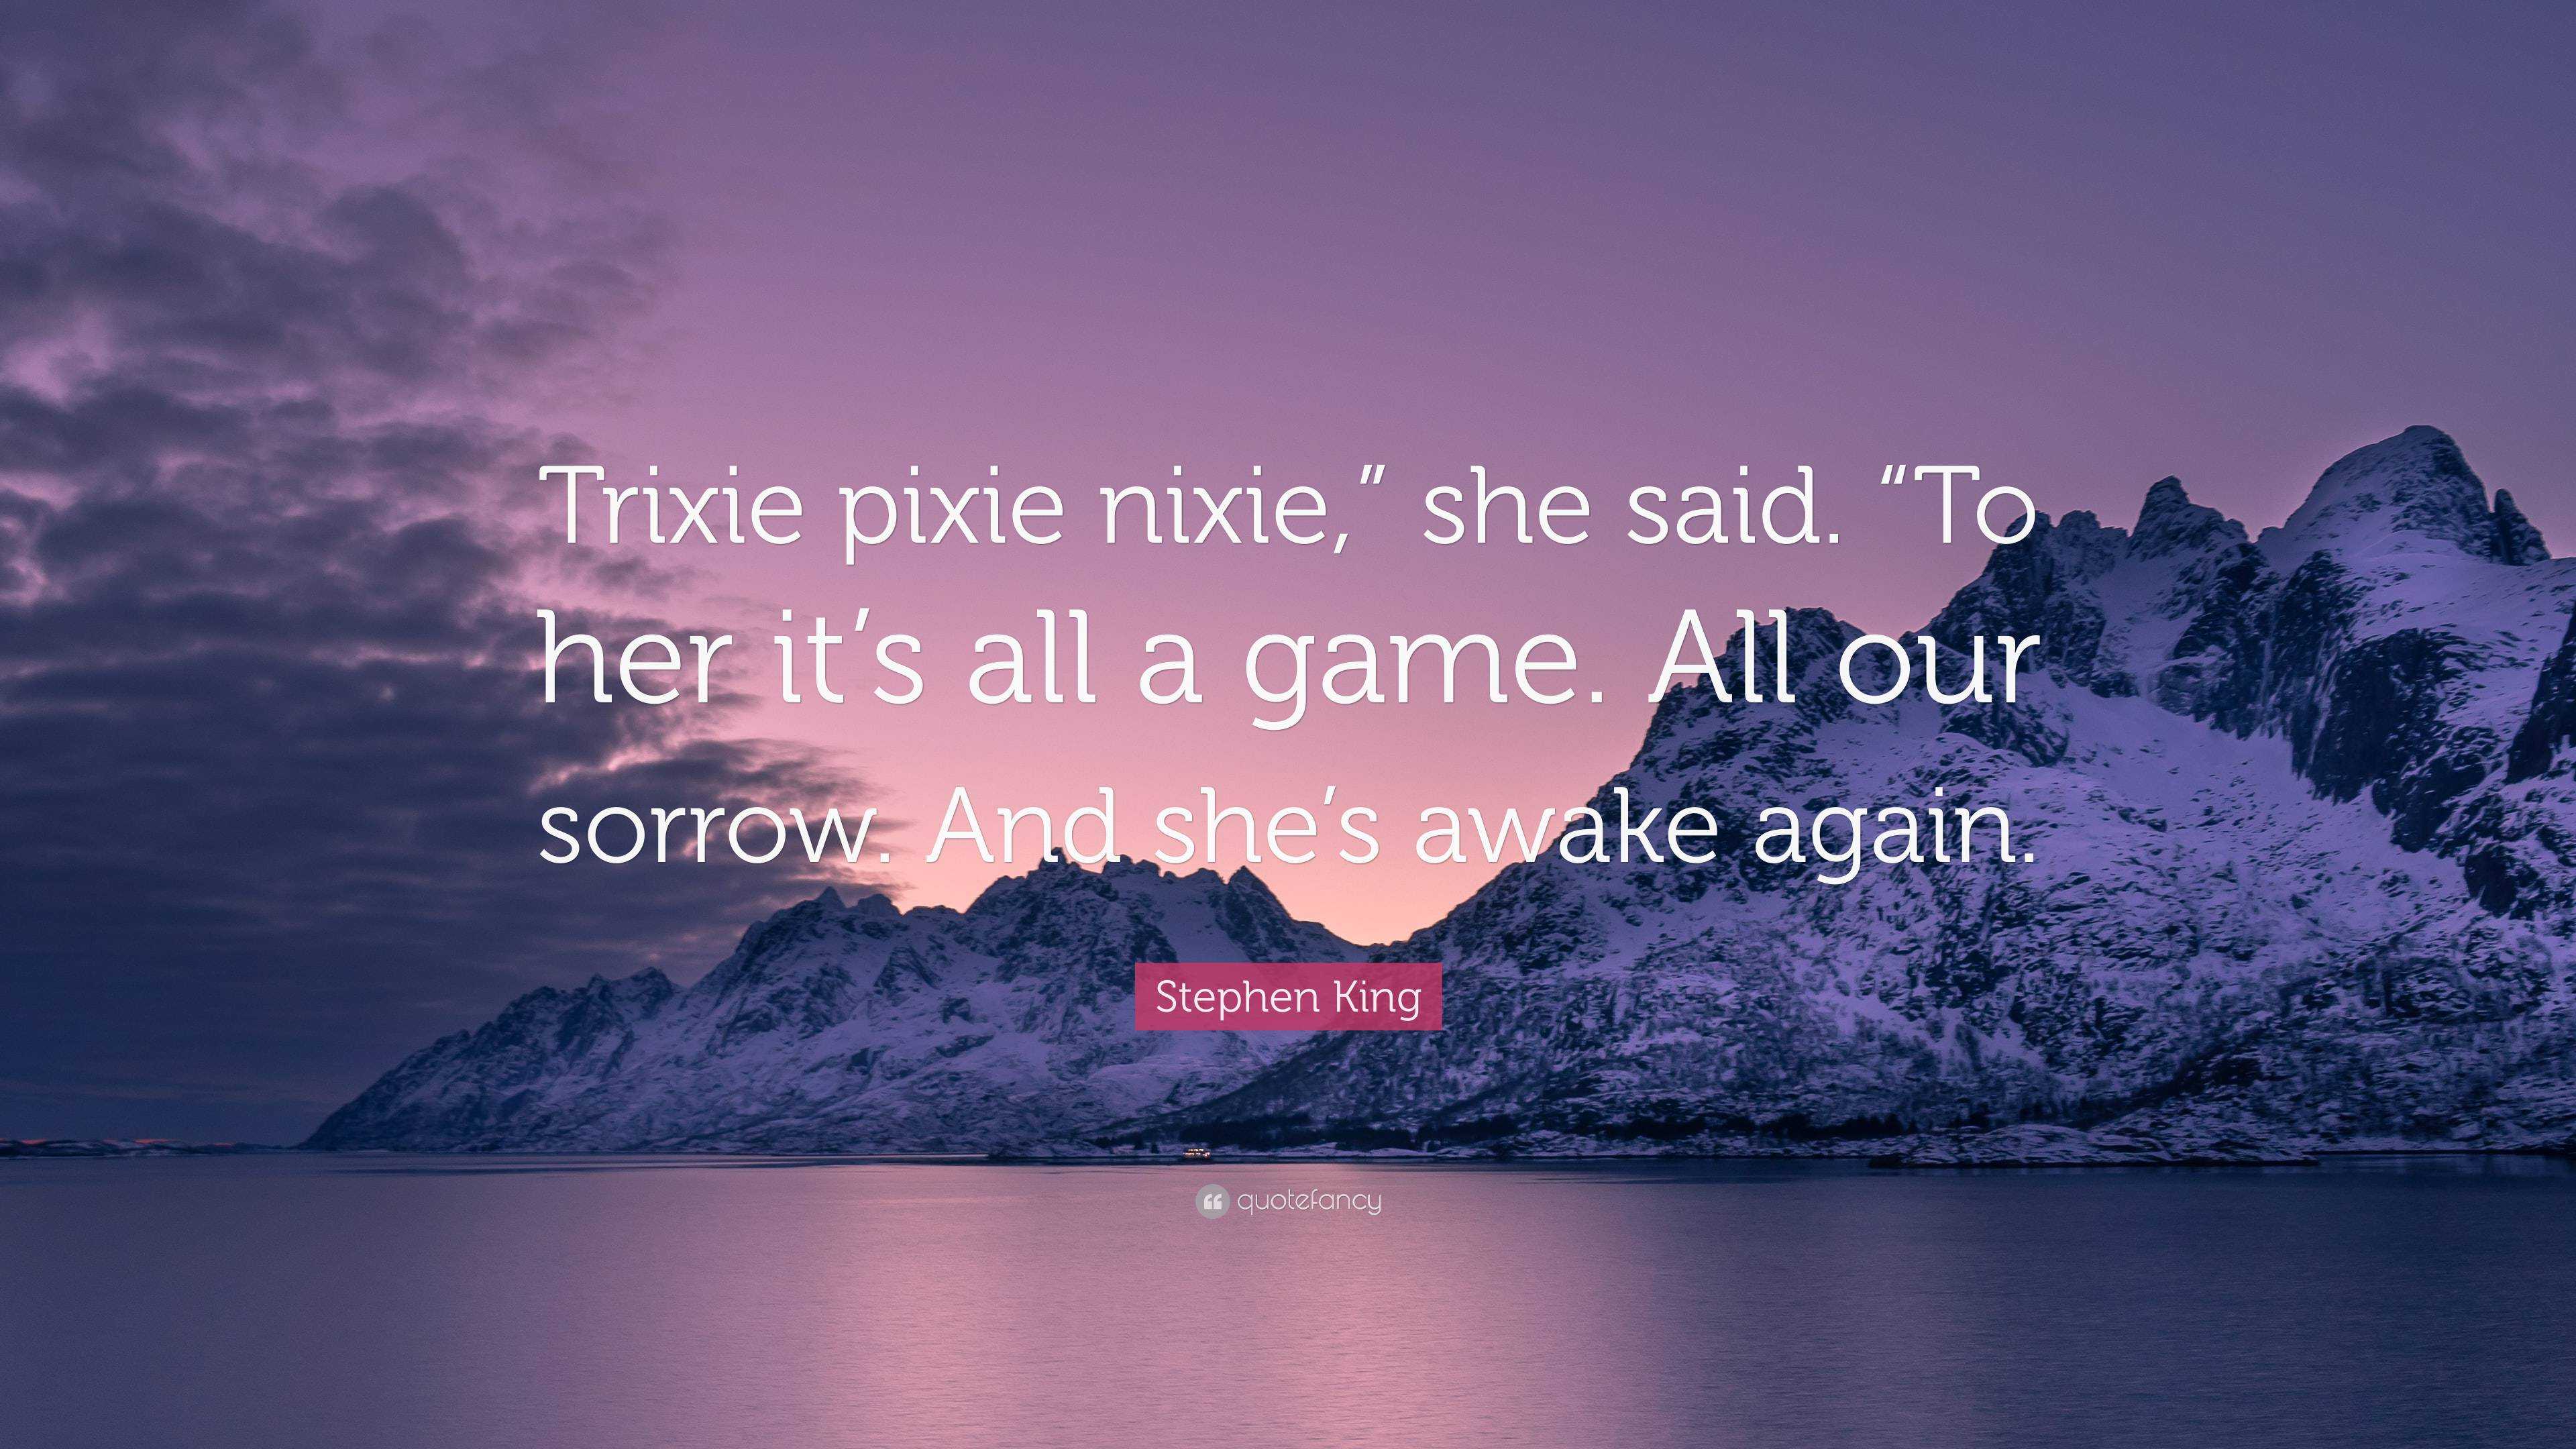 Pixie trixie the 18 inch